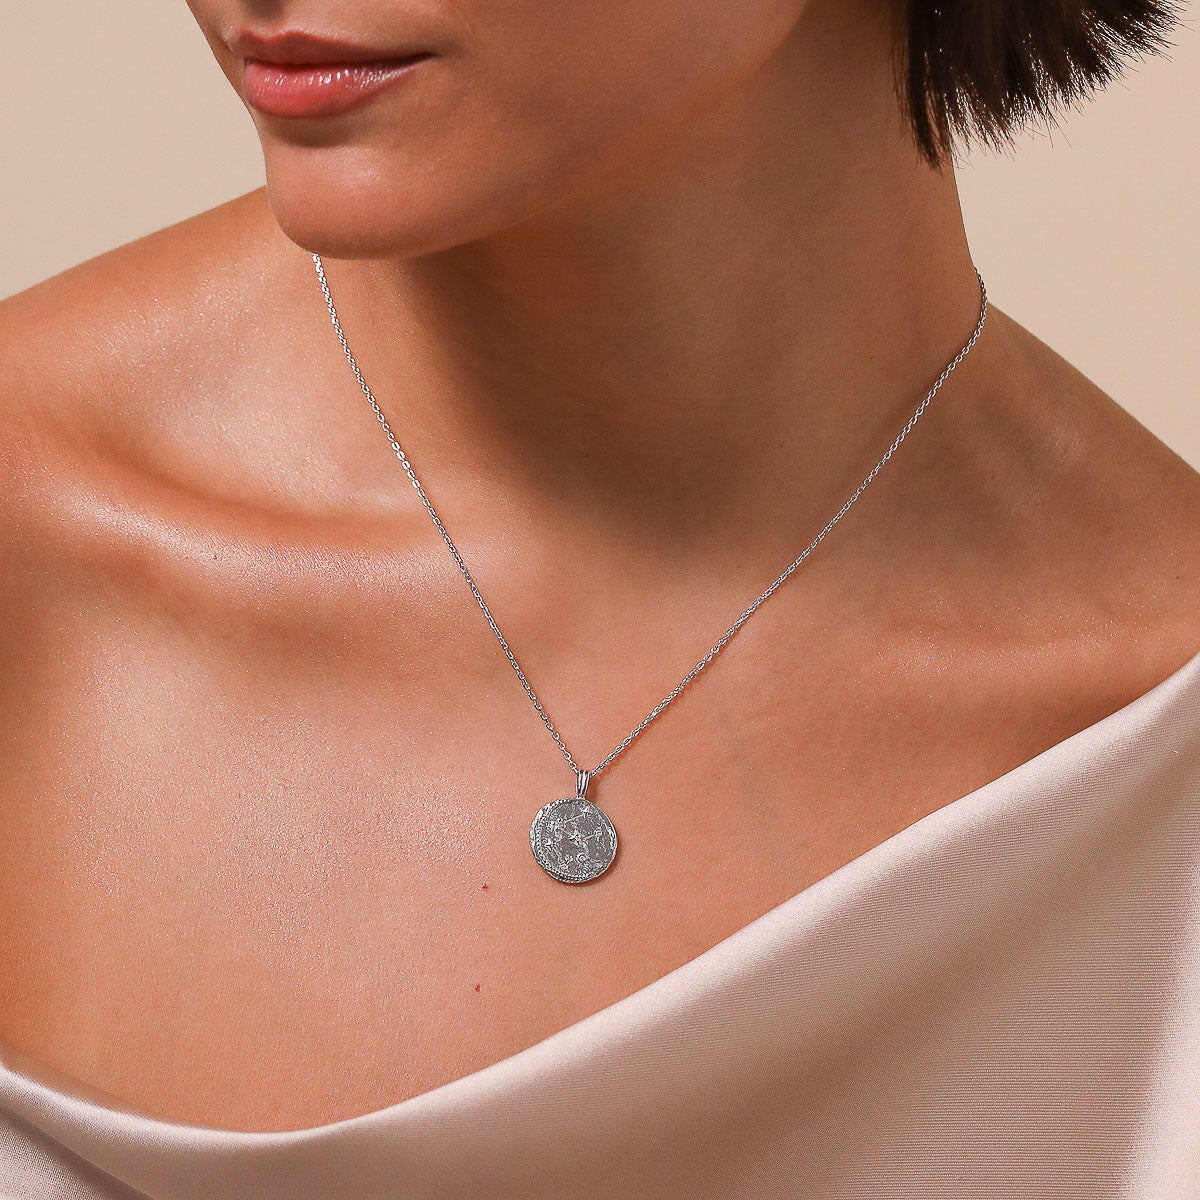 Aquarius Zodiac Silver Pendant Necklace | Astrid & Miyu Necklaces